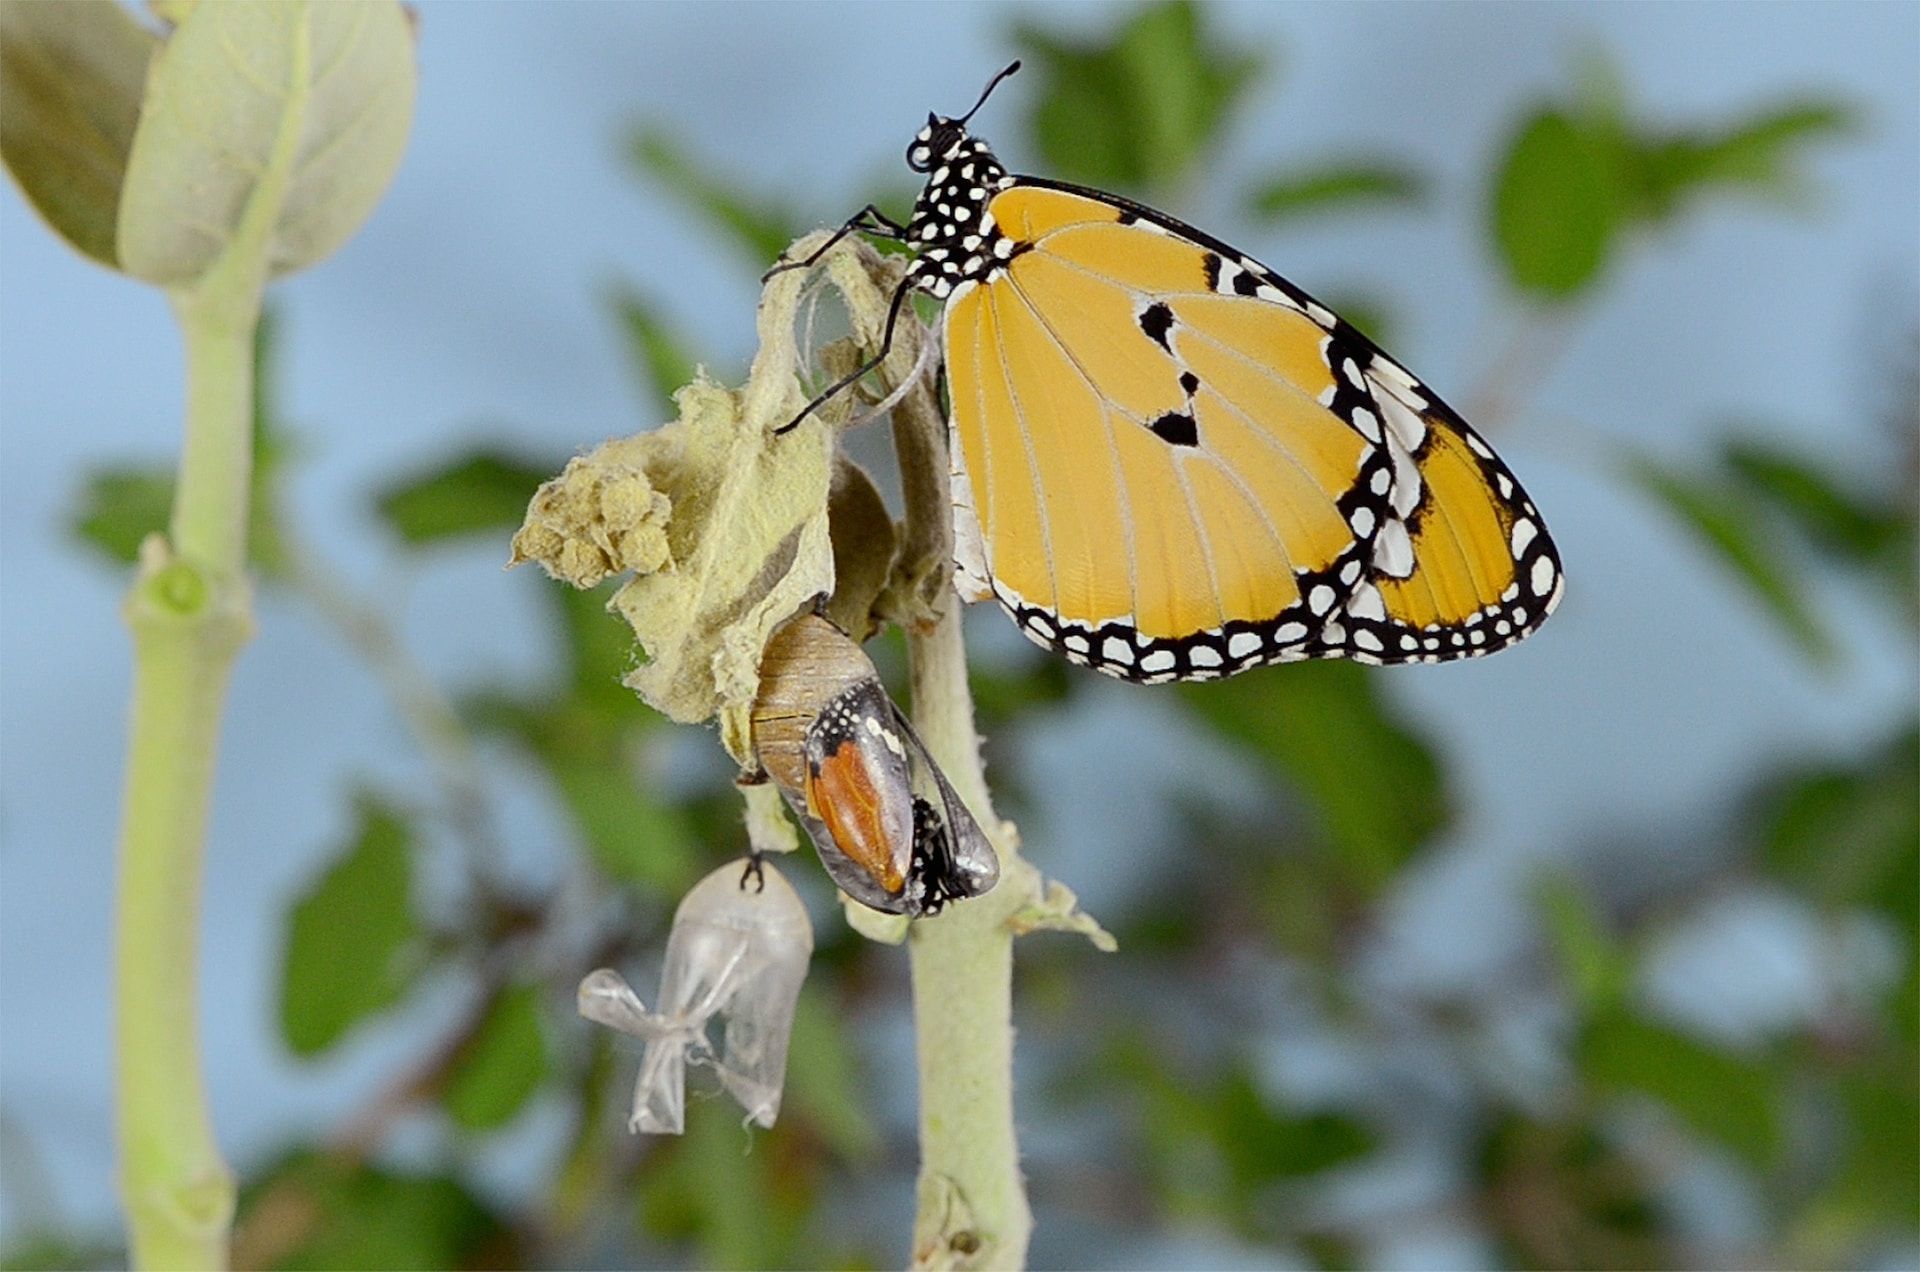 papillons sortant de leur chrysalide - Photo by Bankim Desai on https://unsplash.com/fr/photos/Byhp06klOjk